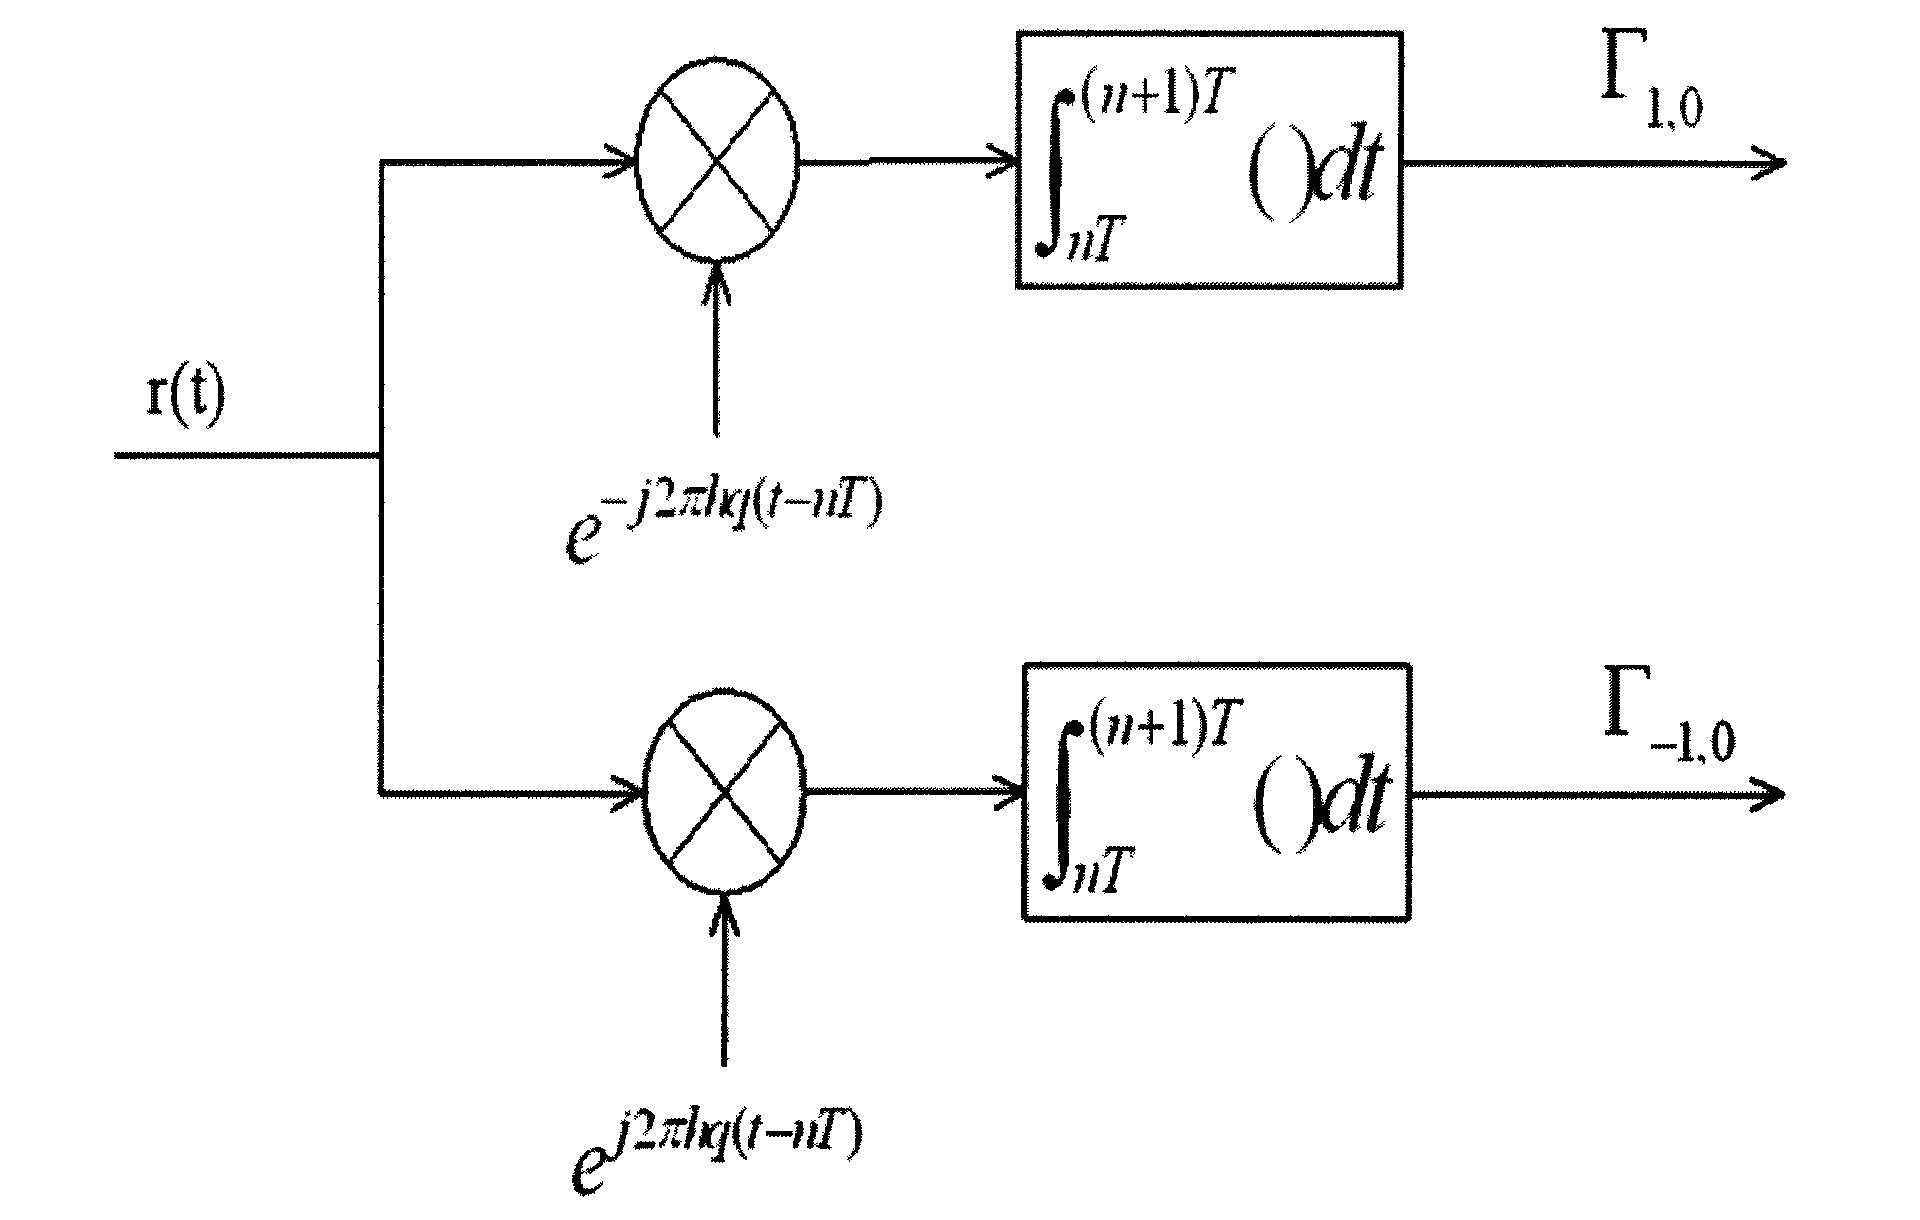 Multi-symbol detecting and symbol synchronizing method based on CPM (critical path method) modulation